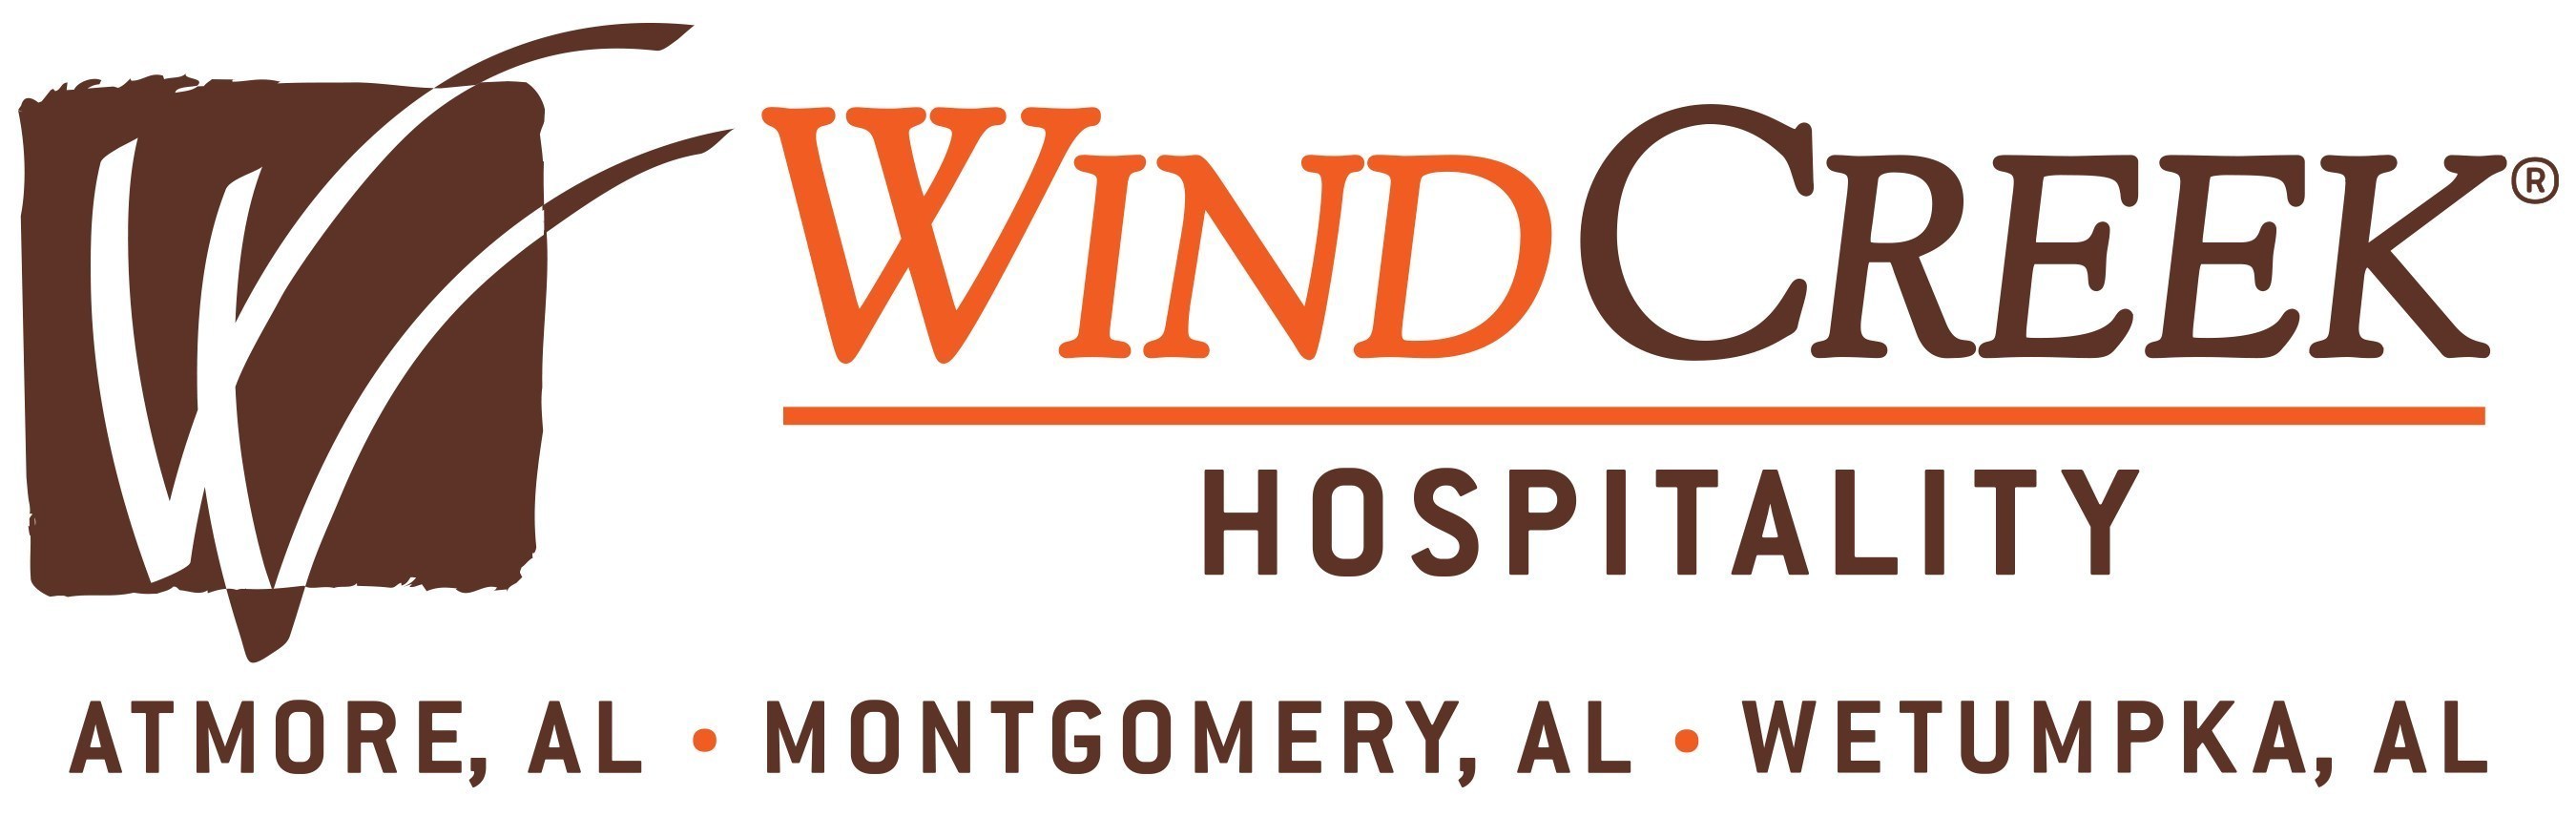 Wind Creek Hospitality logo